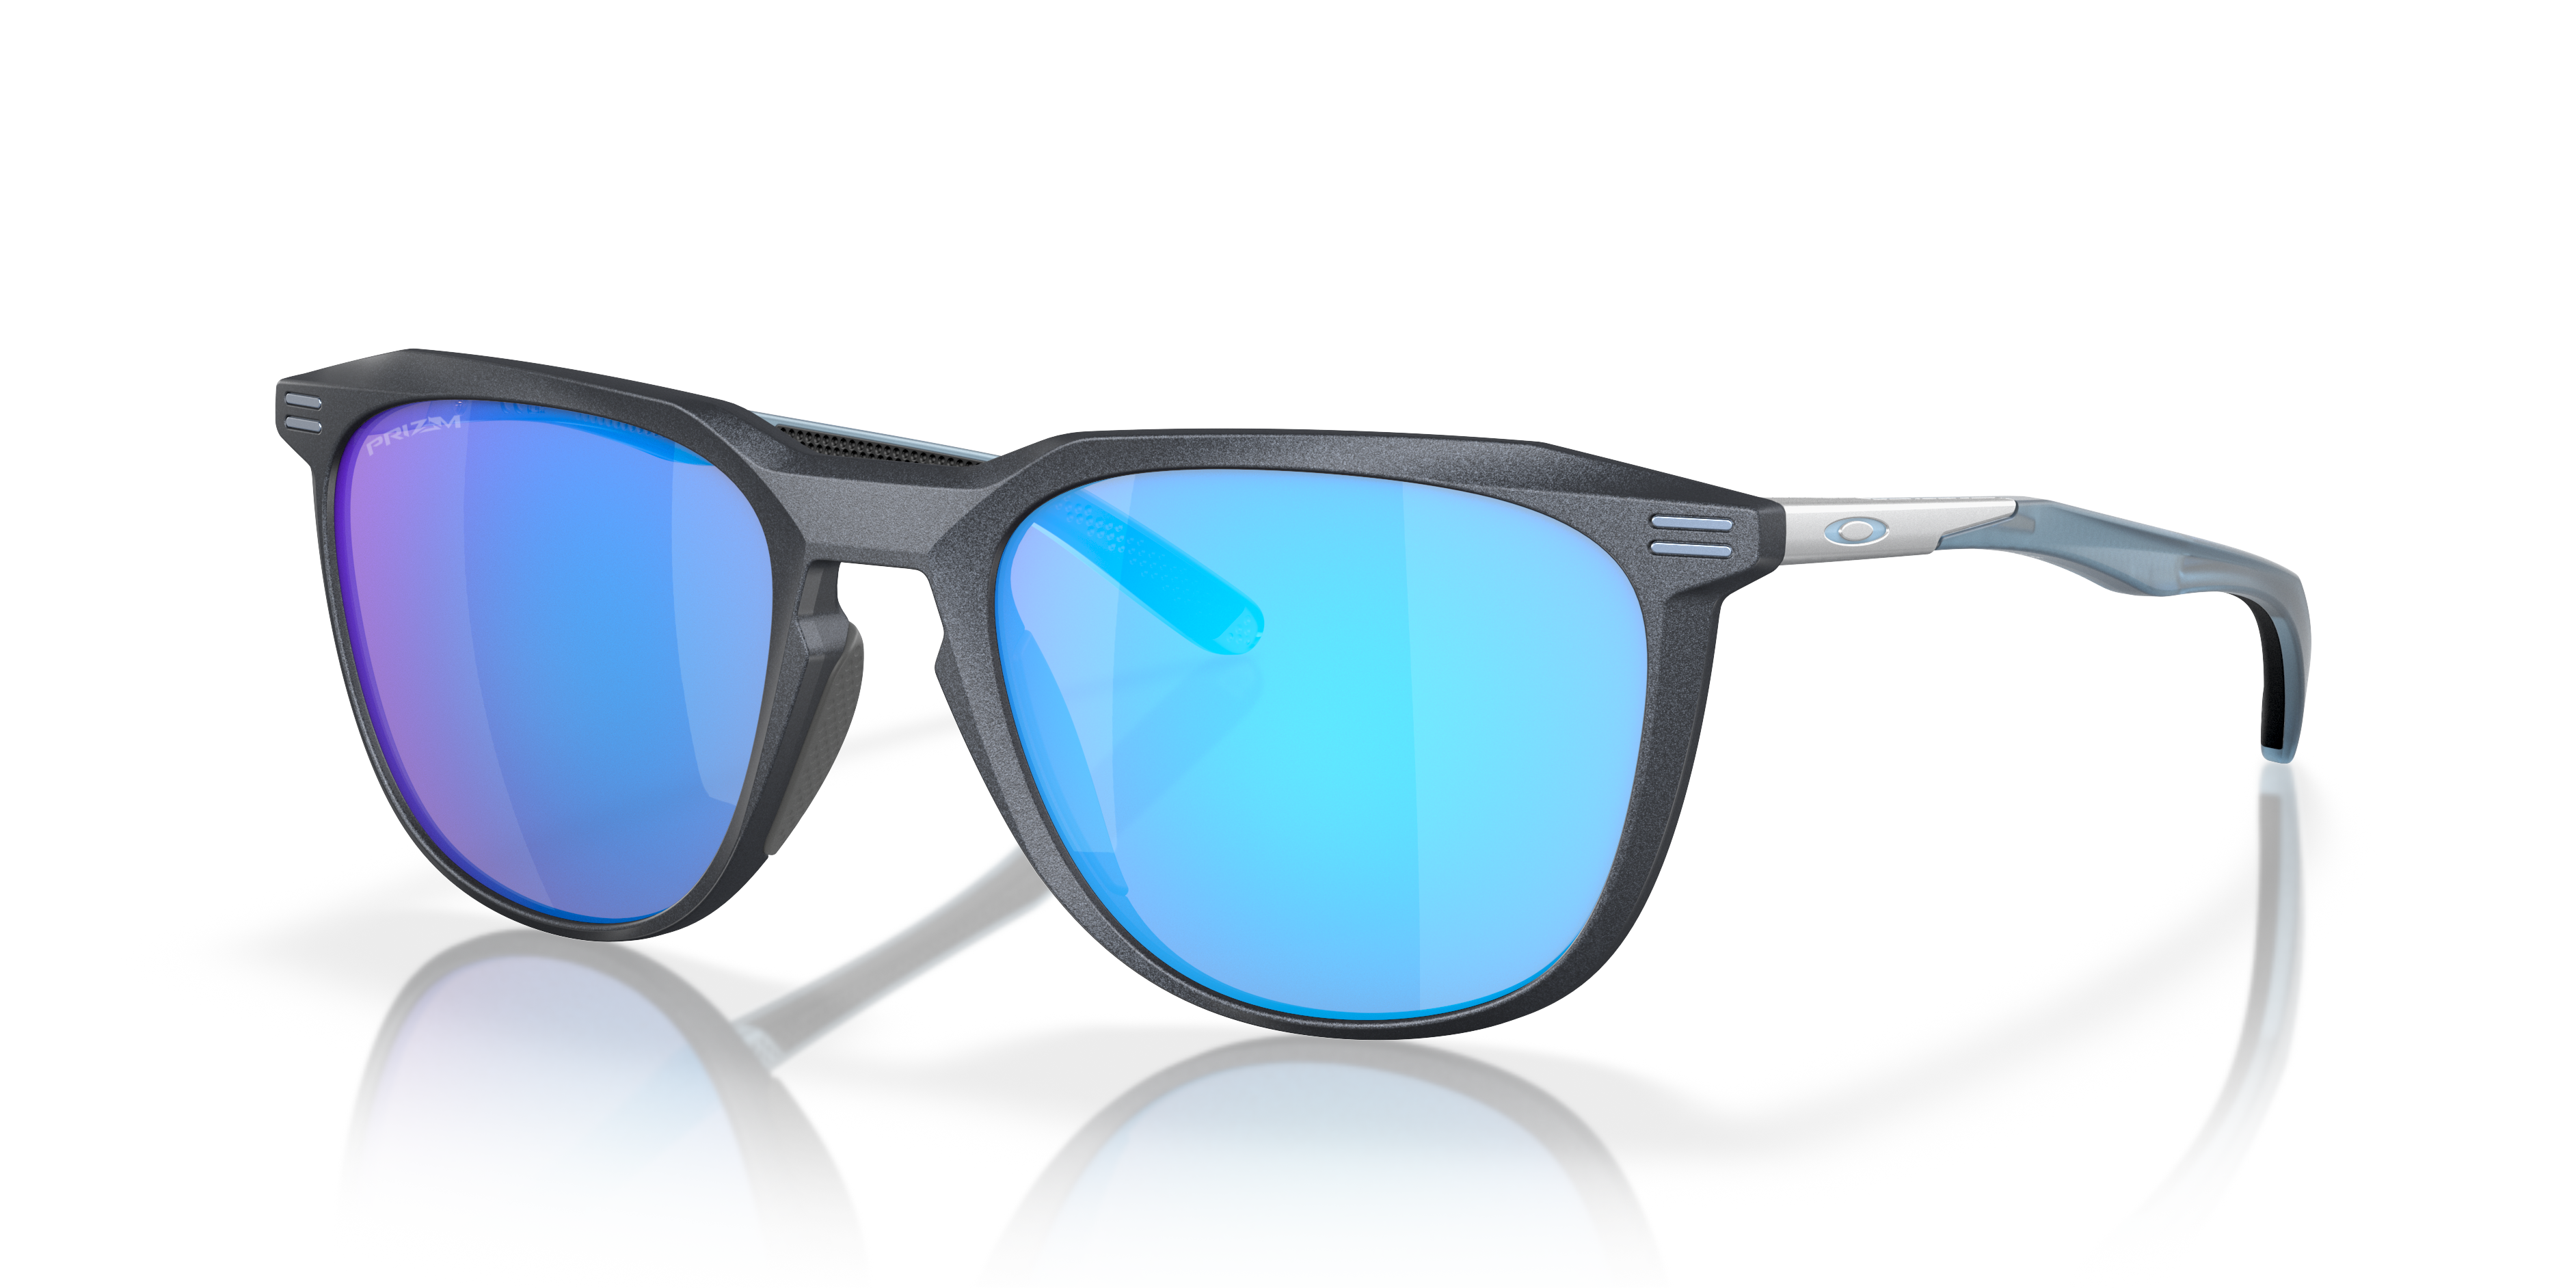 Oakley prizm sunglasses peeling - Equipment - TrainerRoad